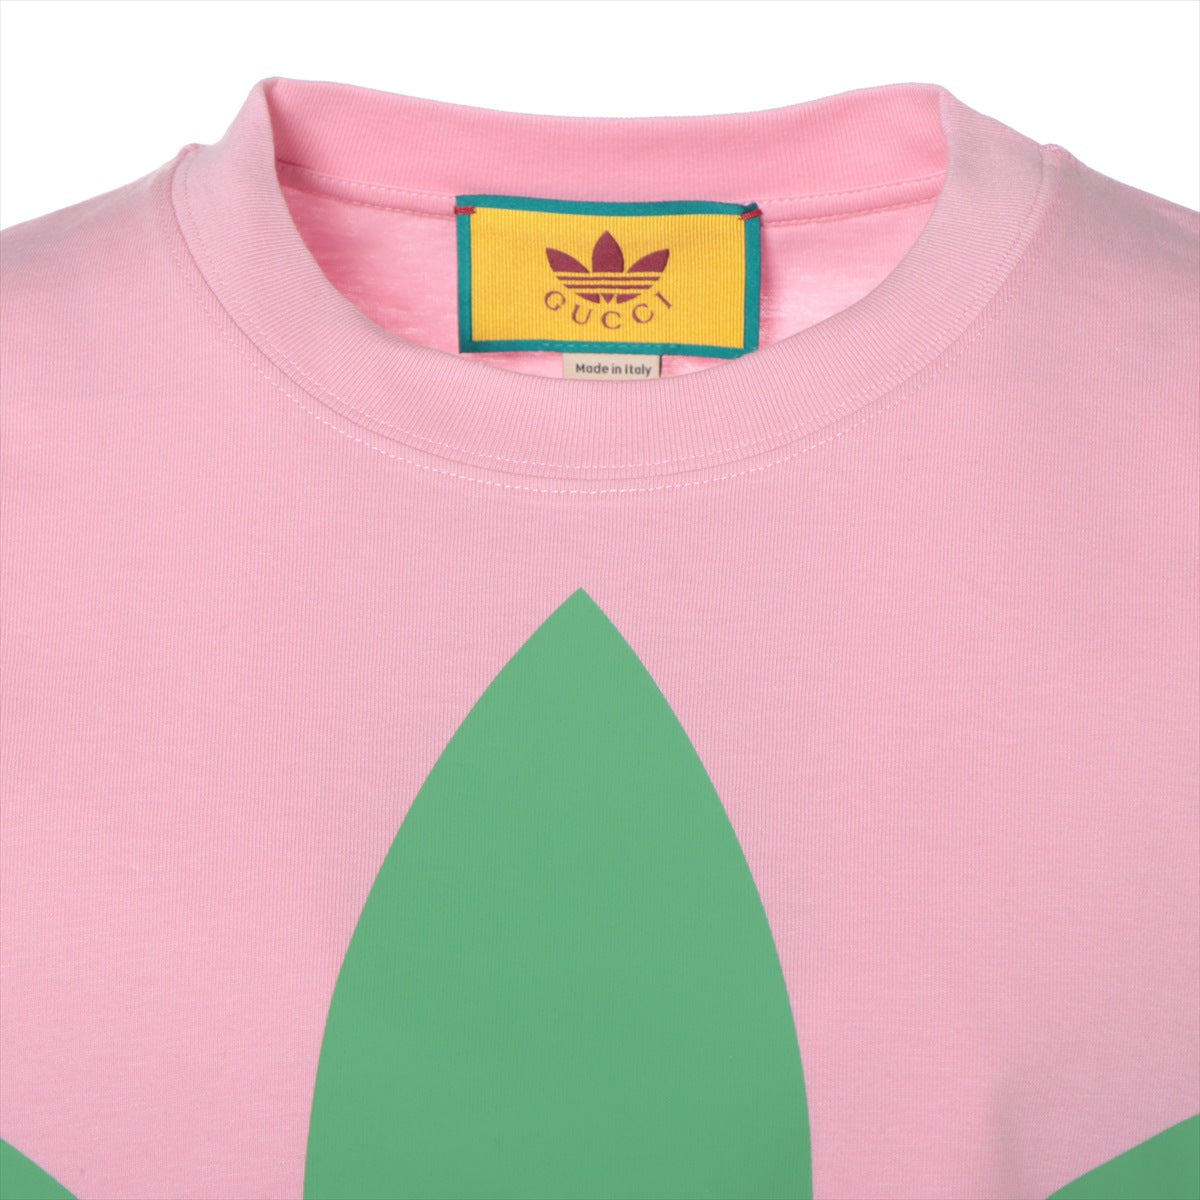 Gucci x adidas Cotton T-shirt XXS Ladies' Pink  723384